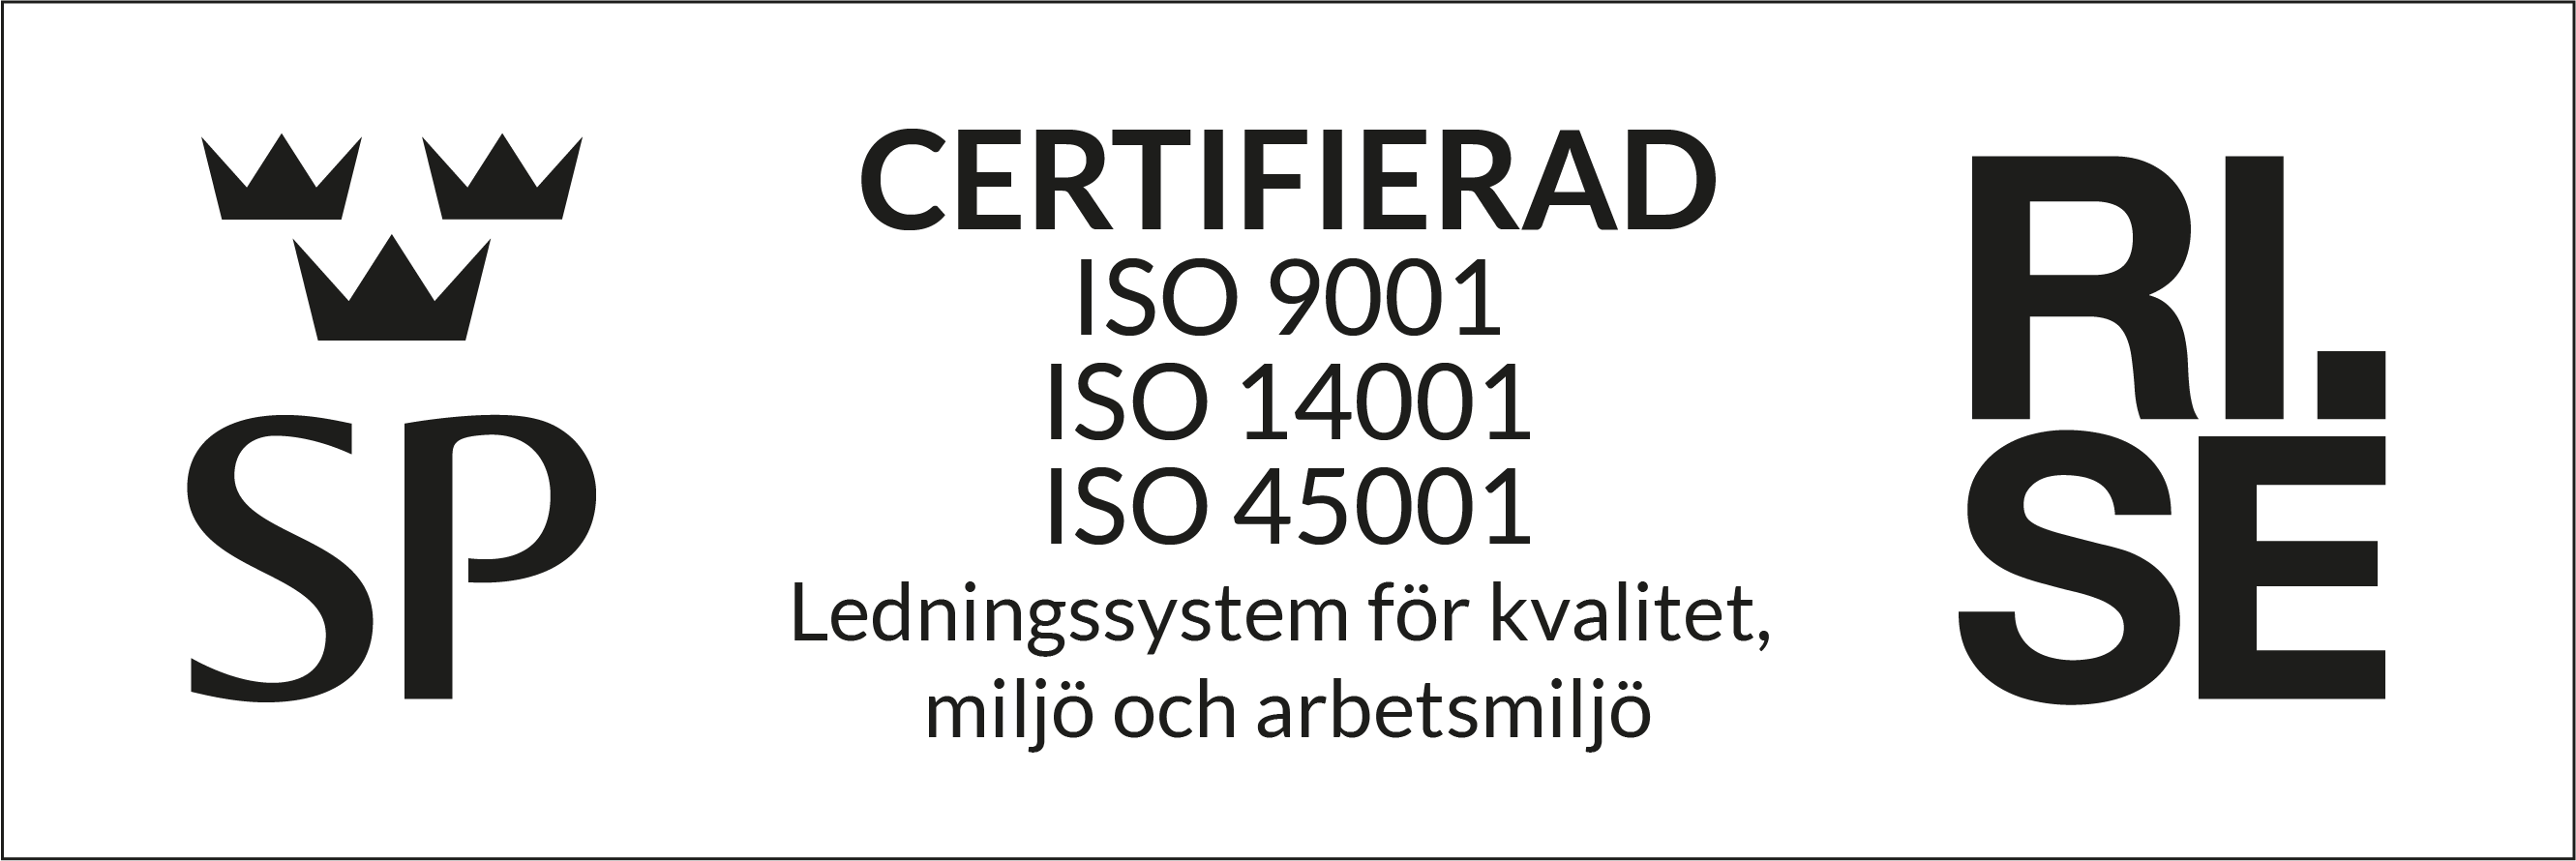 Våra ISO certifikat